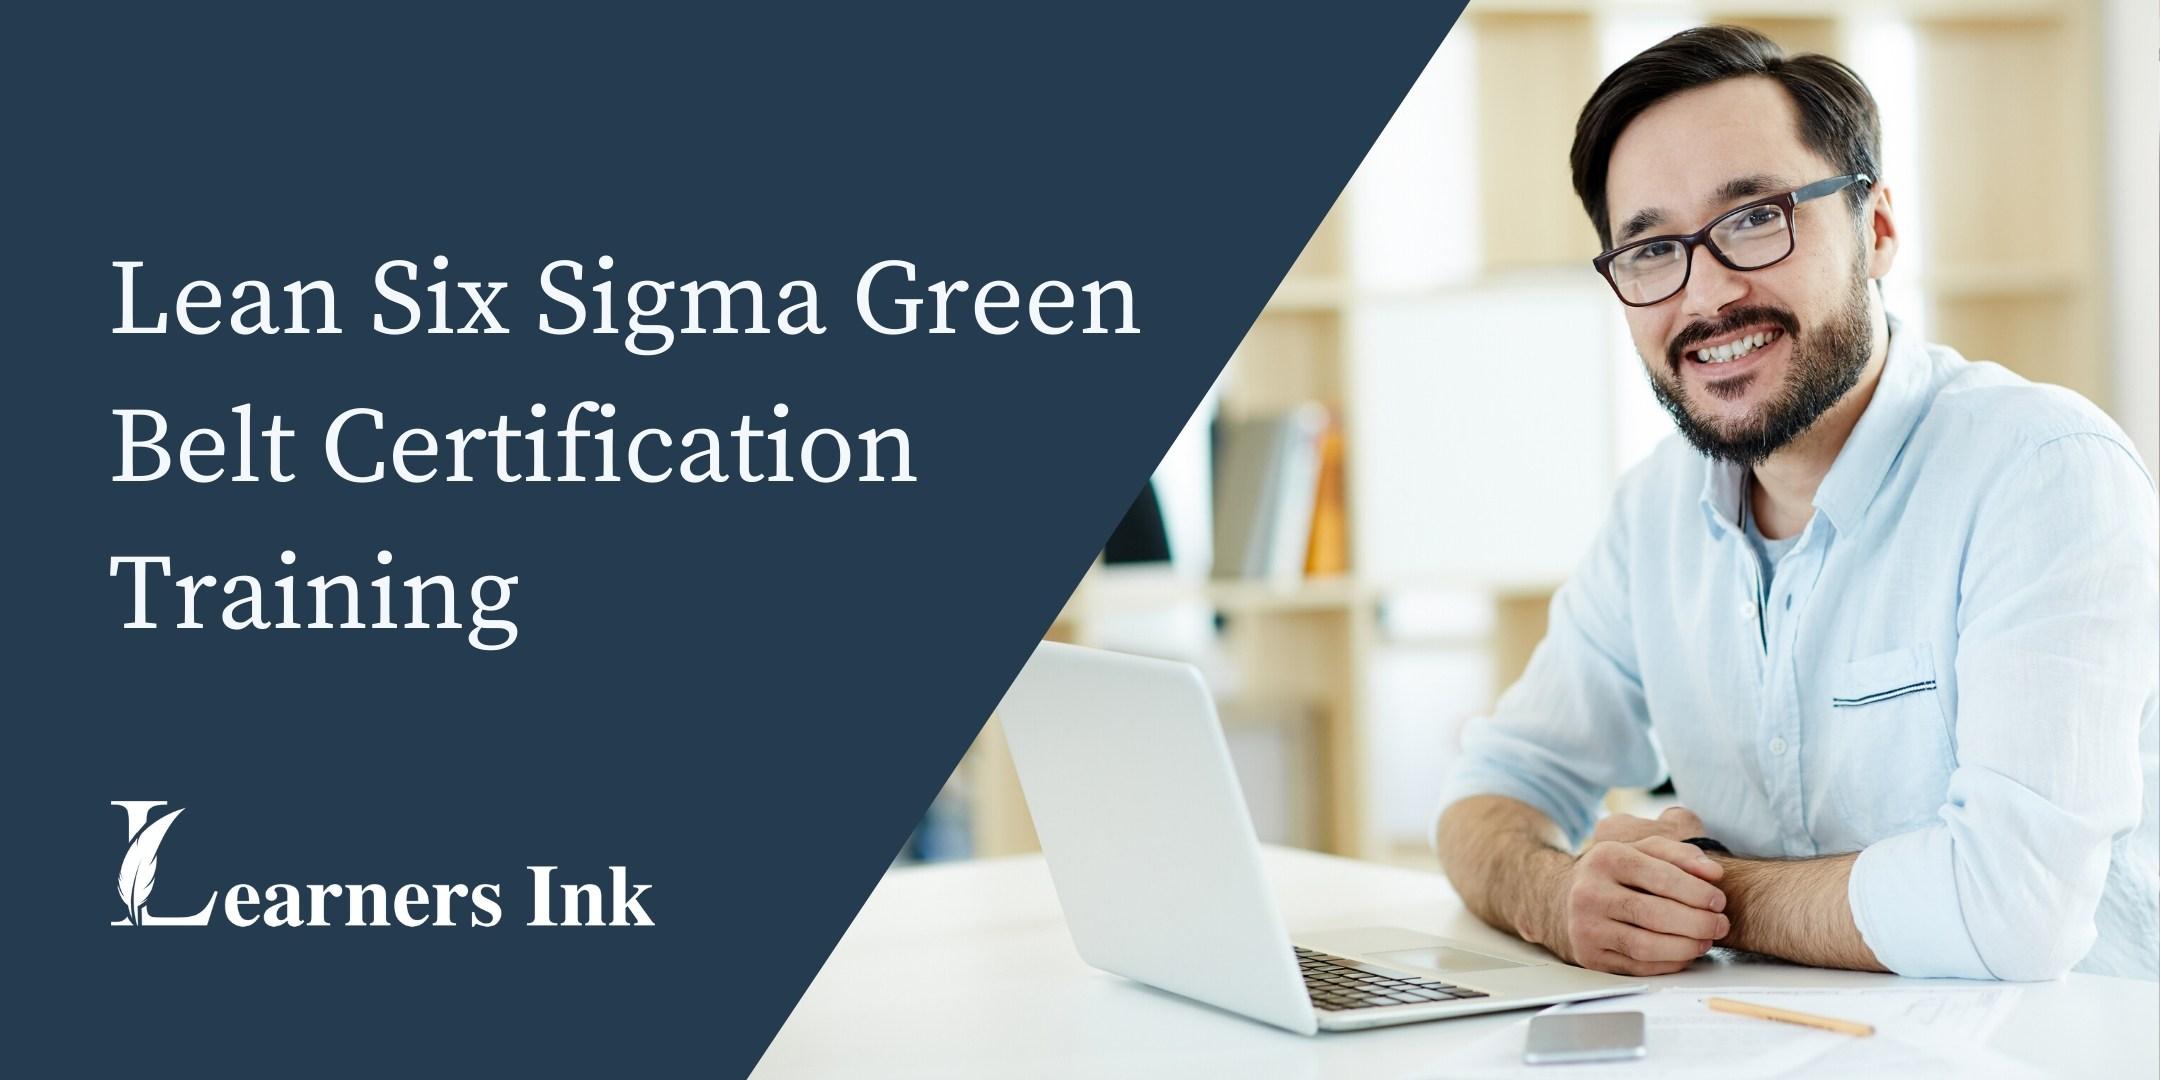 Lean Six Sigma Green Belt Certification Training Course (LSSGB) in Boise